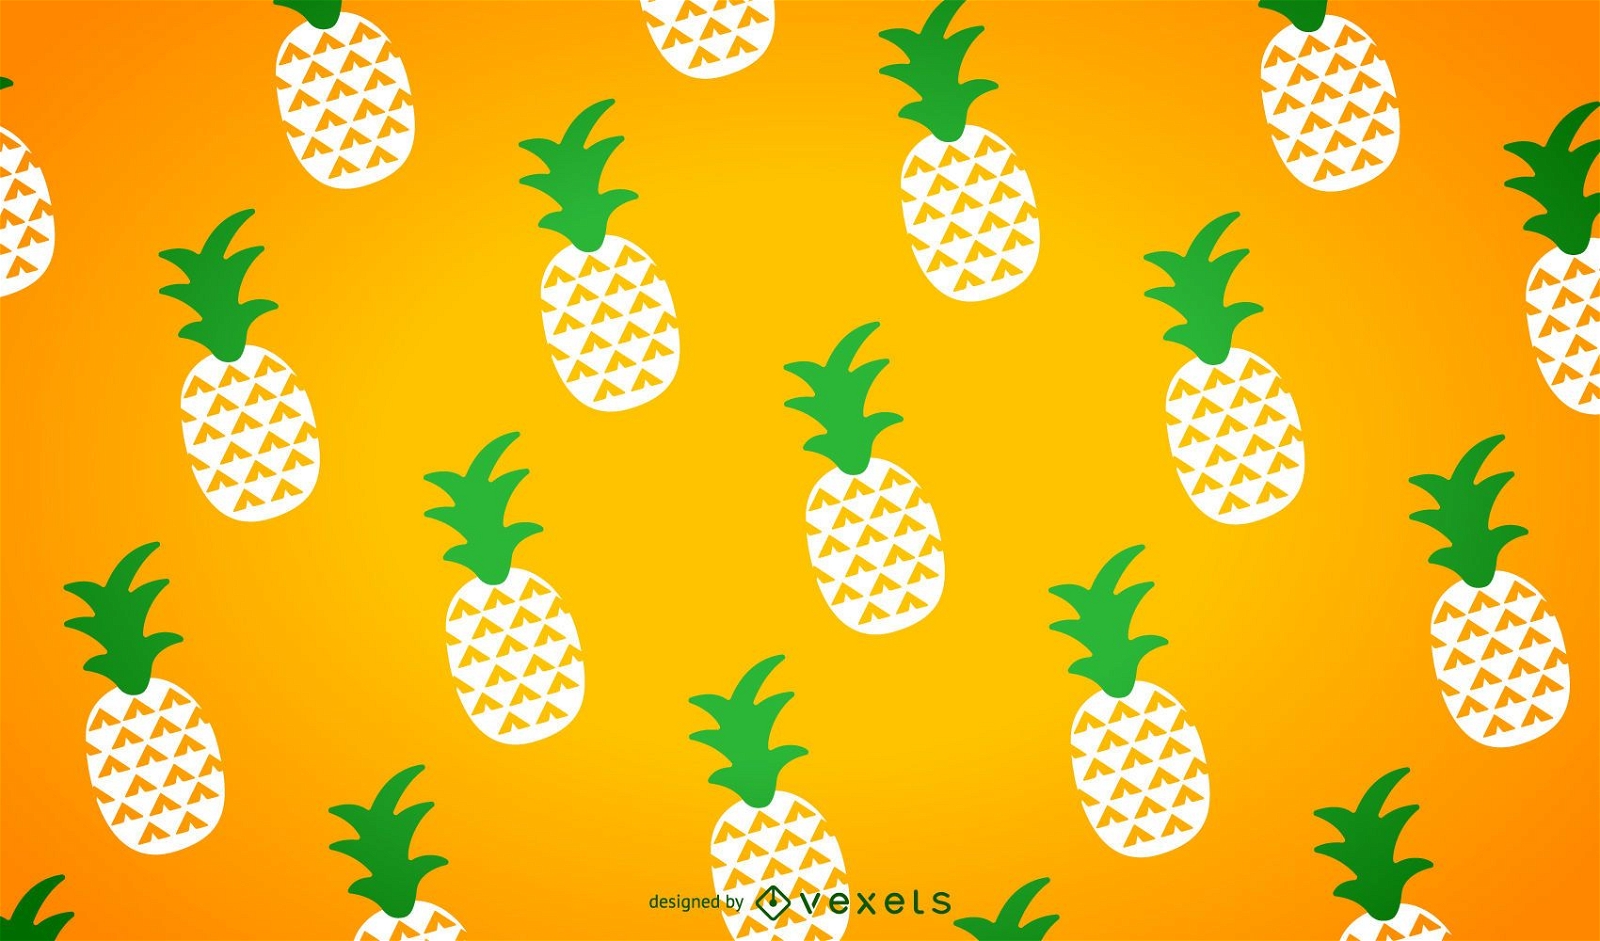 Illustrated seamless pineapple patterns